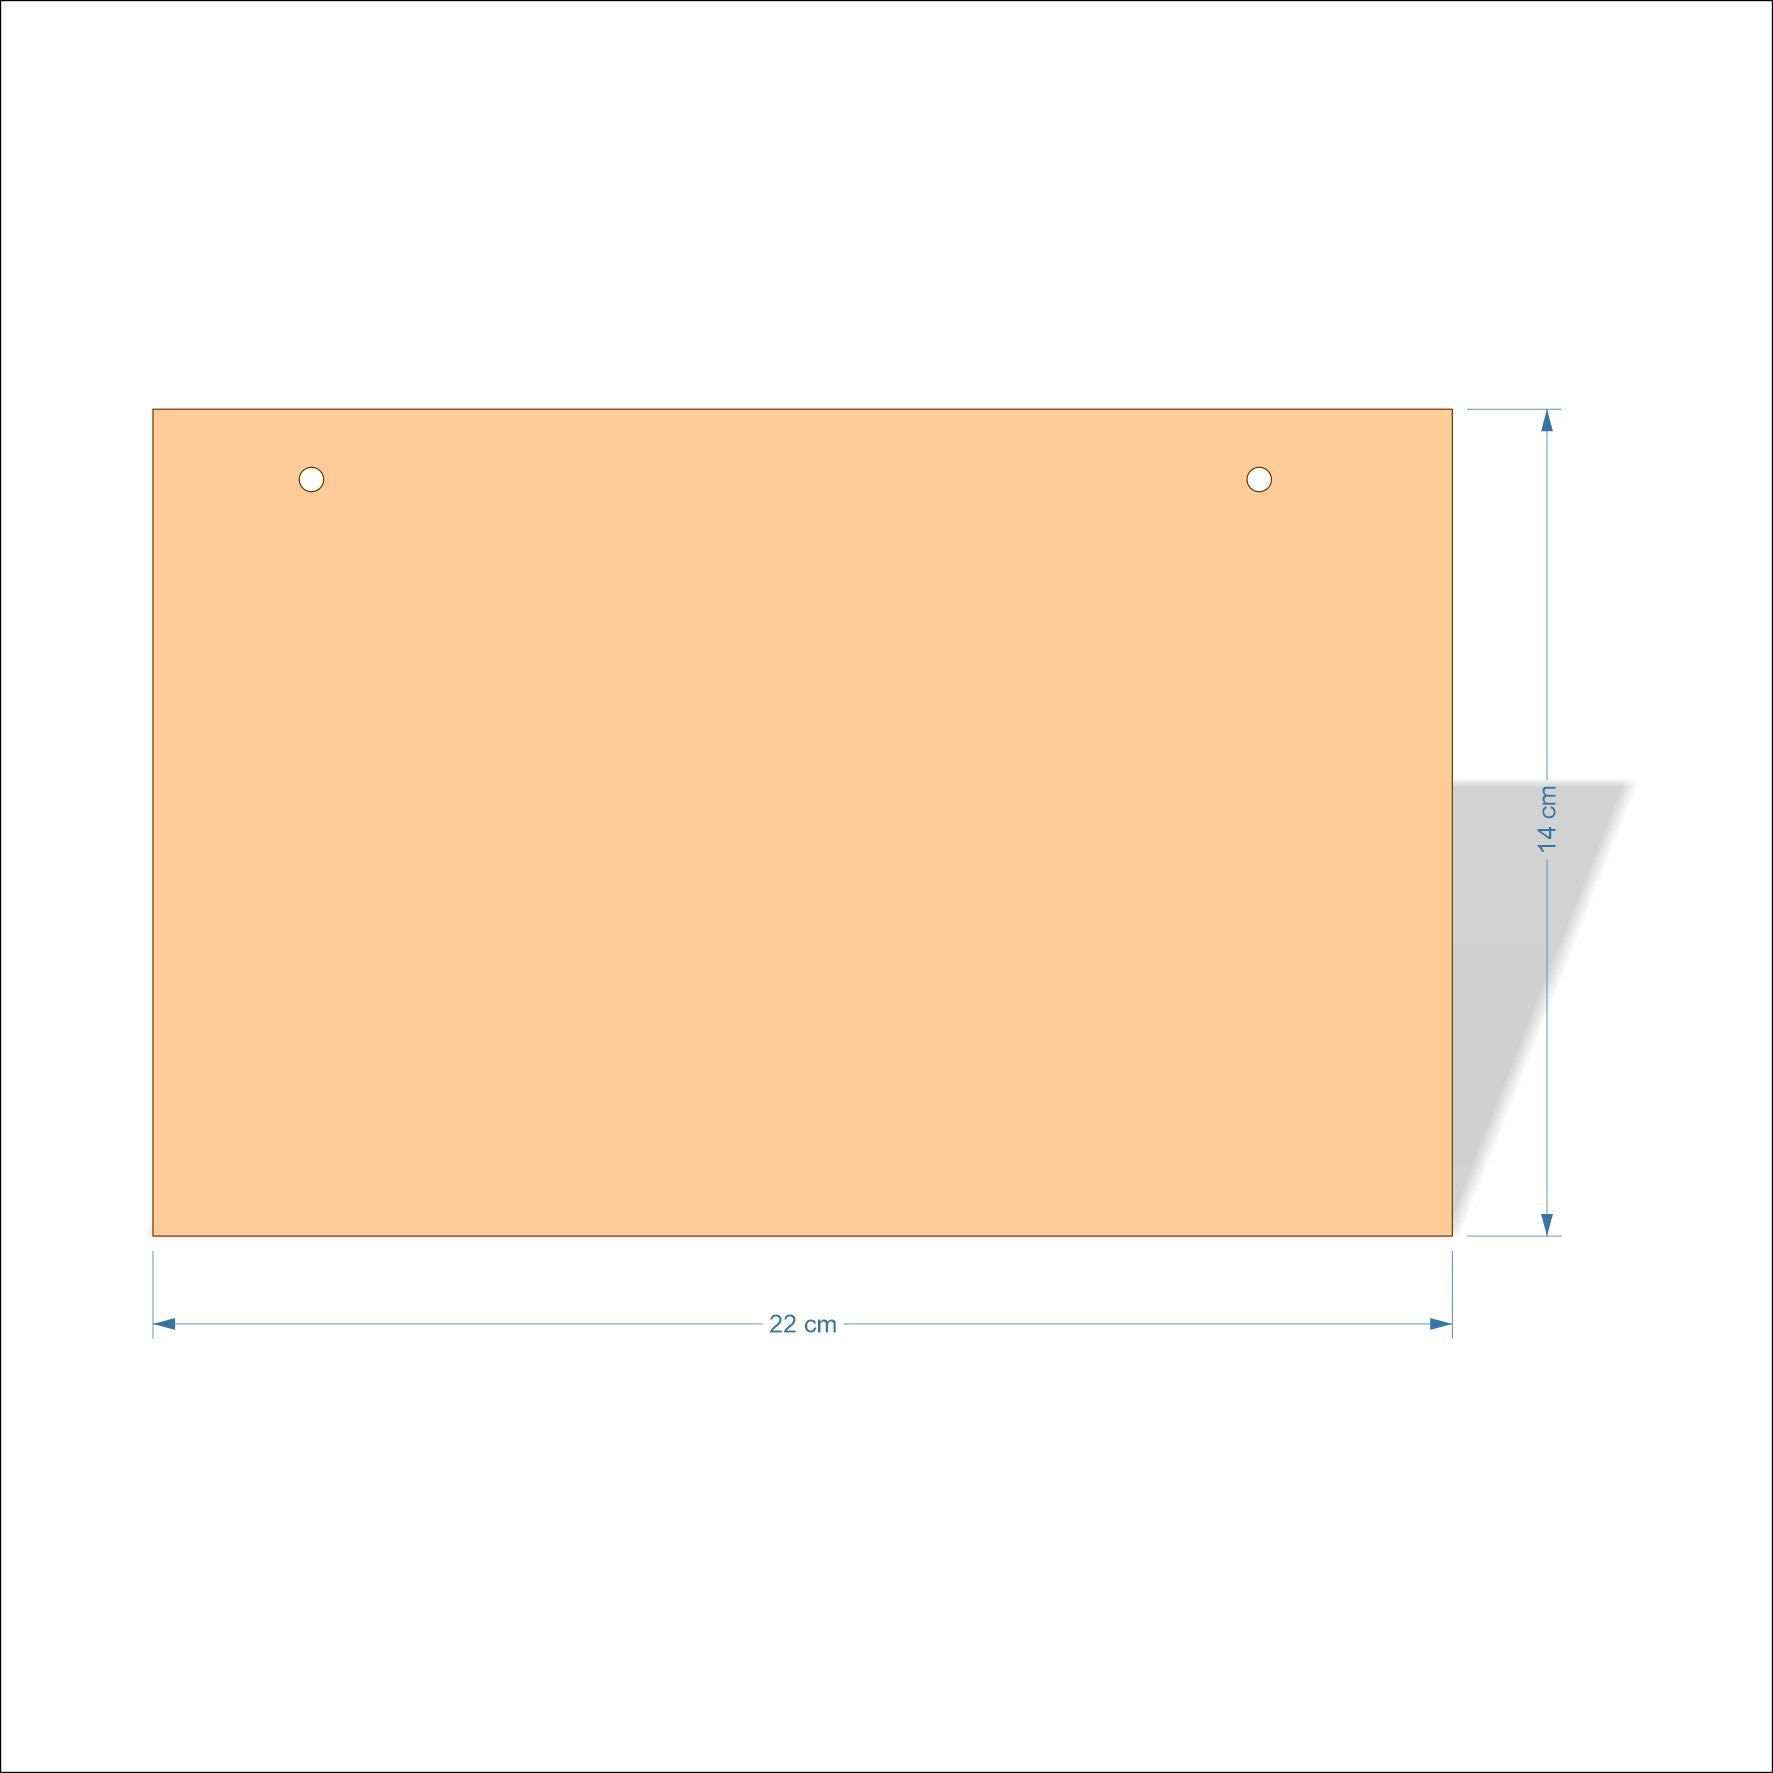 22 cm X 14 cm 3mm MDF Plaques with square corners